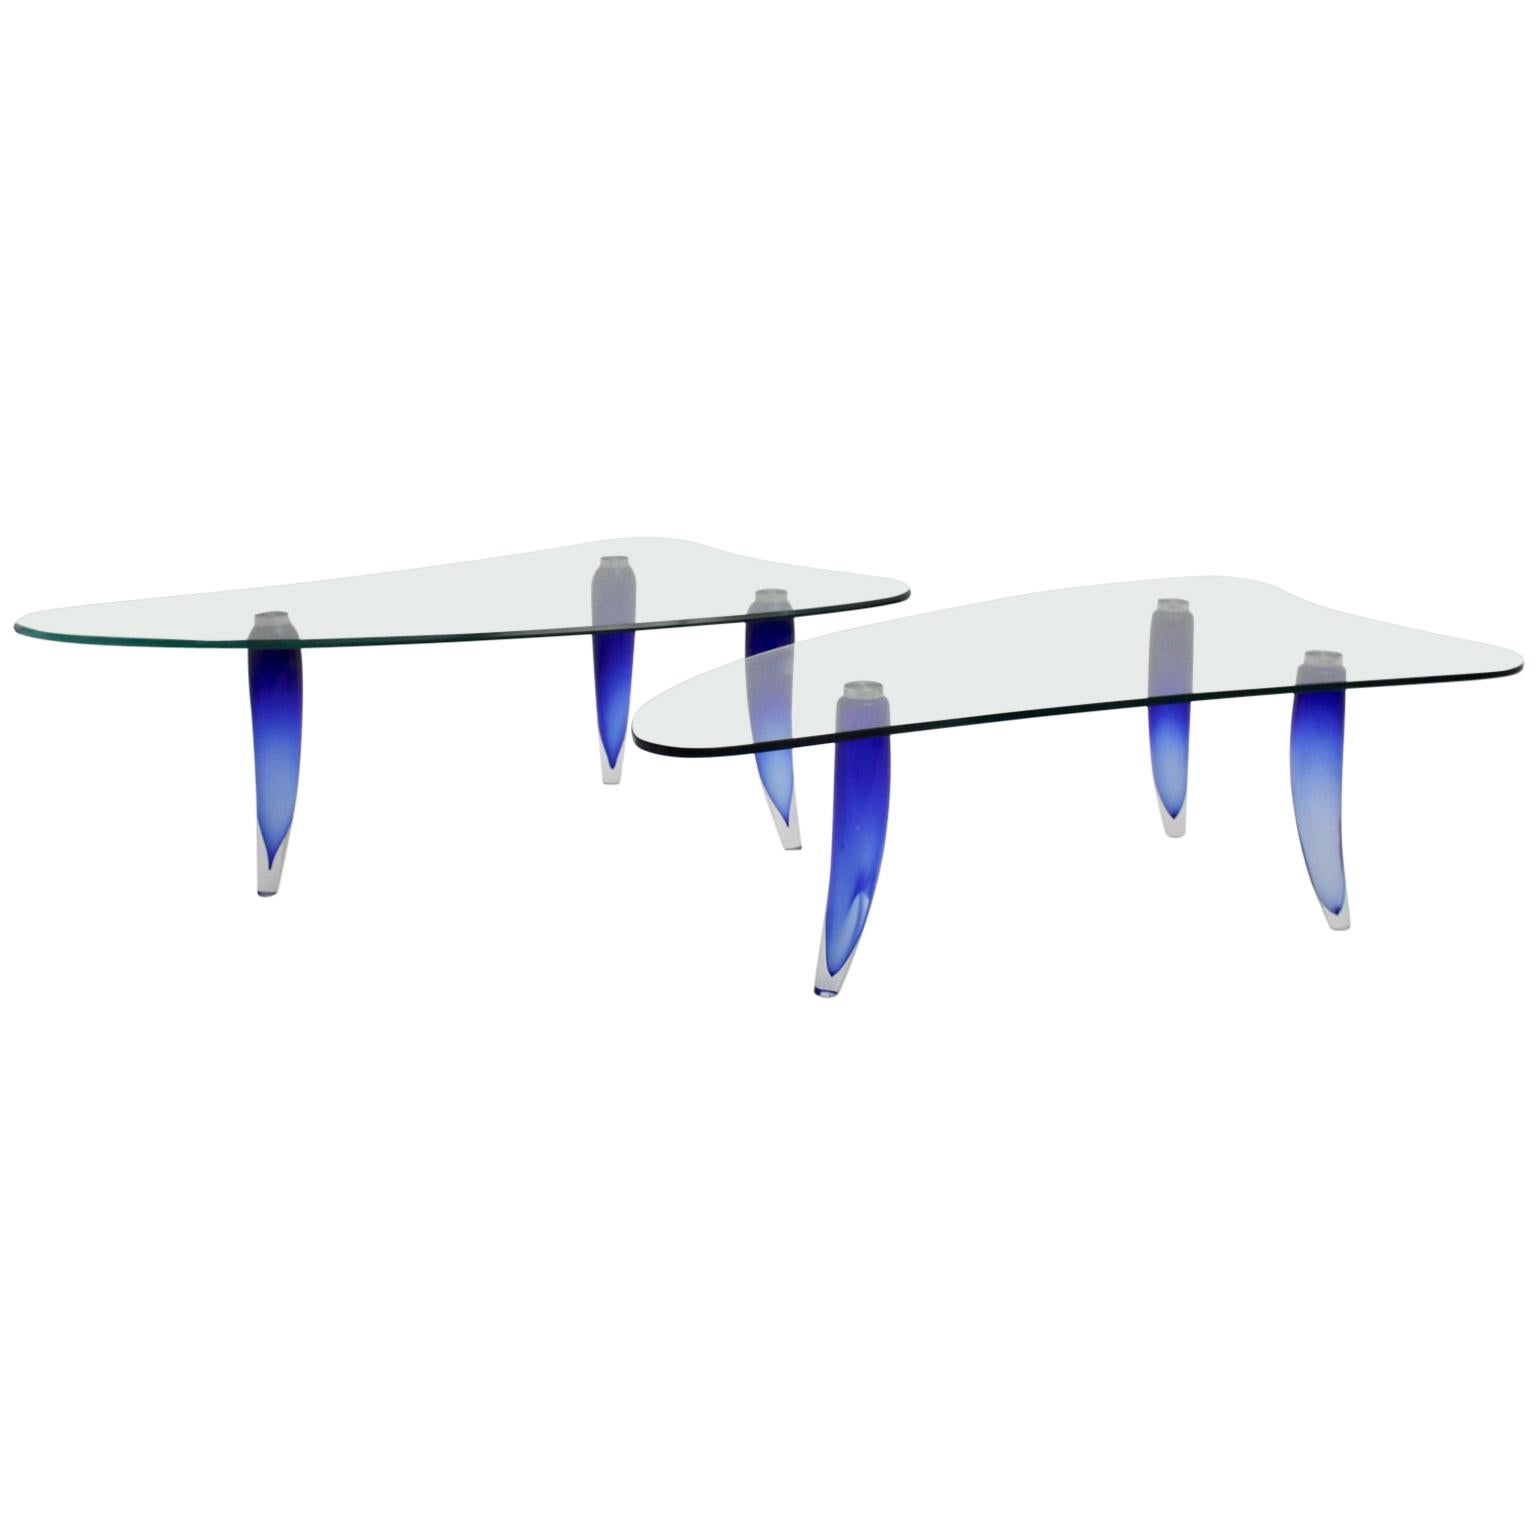 Table basse moderne en verre bleu et transparent Seguso attribuée à Seguso vers 1980, Italie